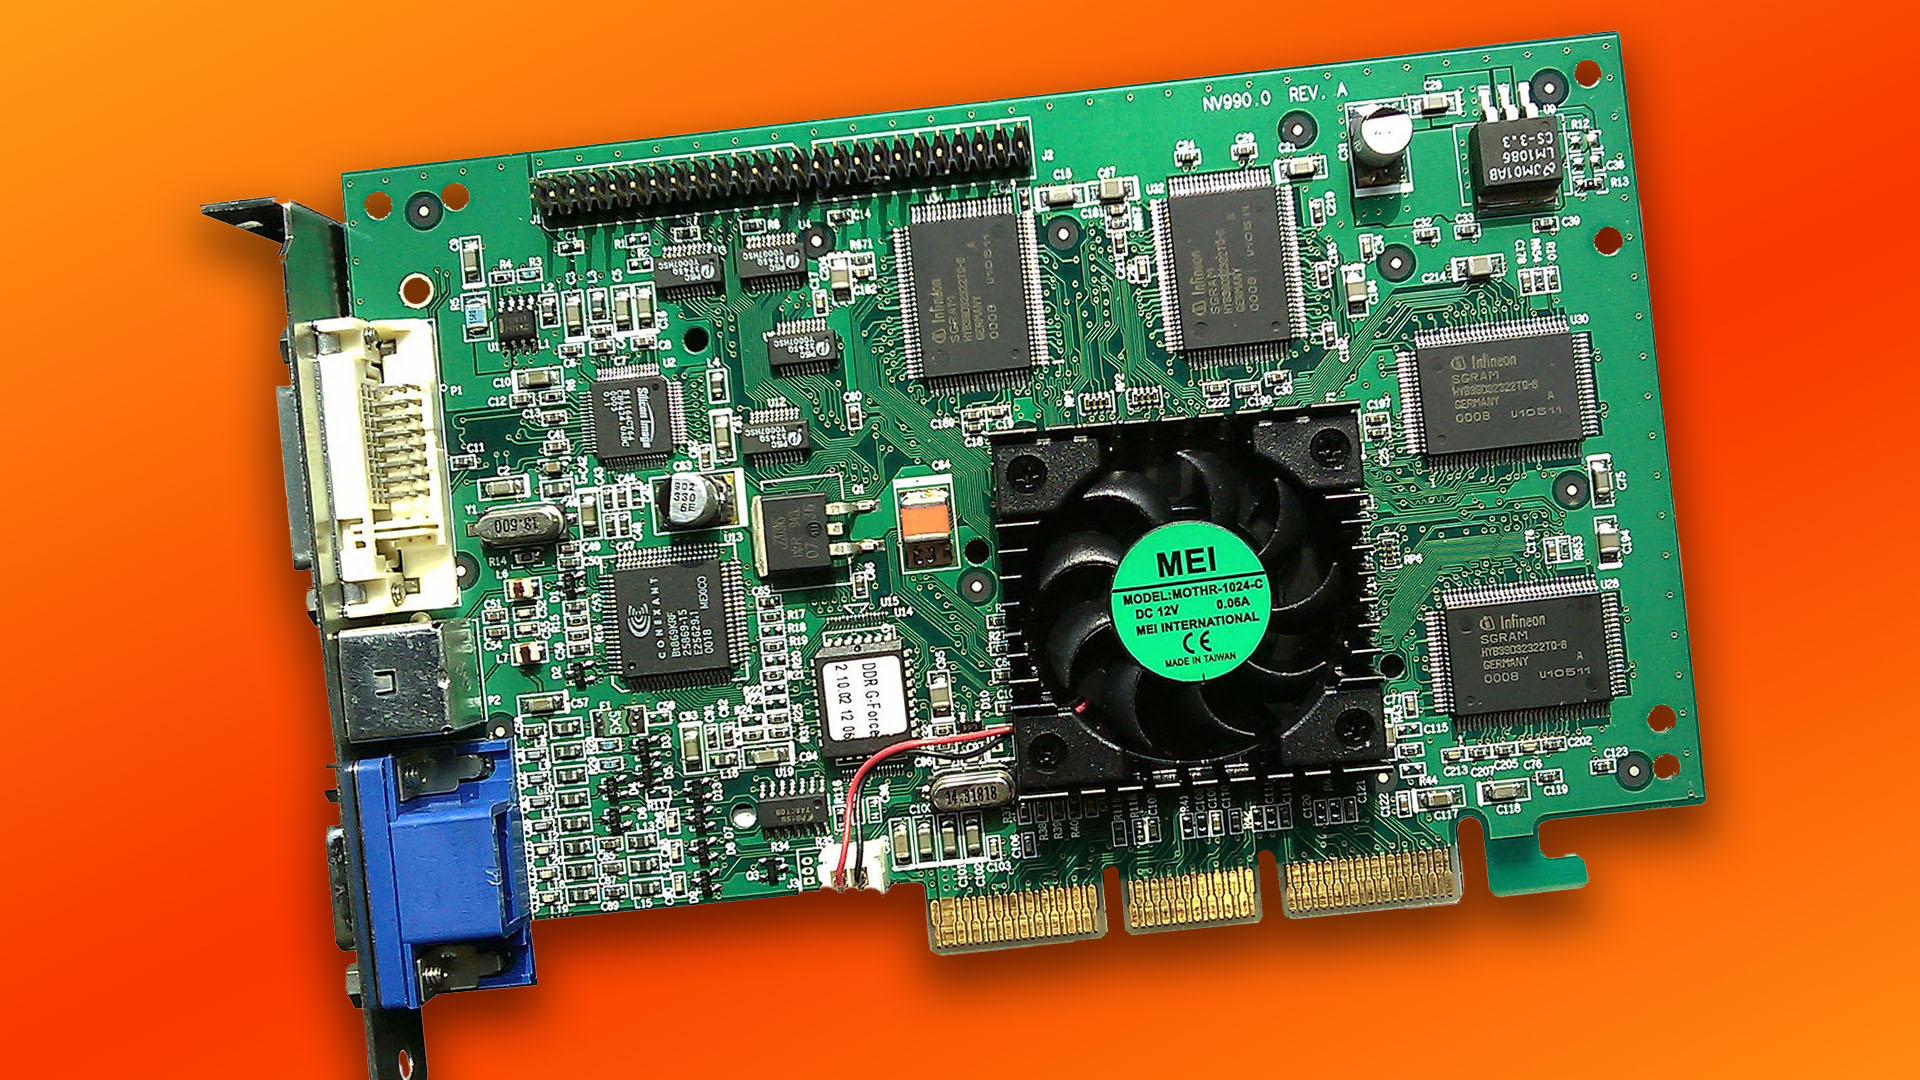 Nvidia GeForce 256: VisionTek GeForce 256 AGP graphics card with SDR memory